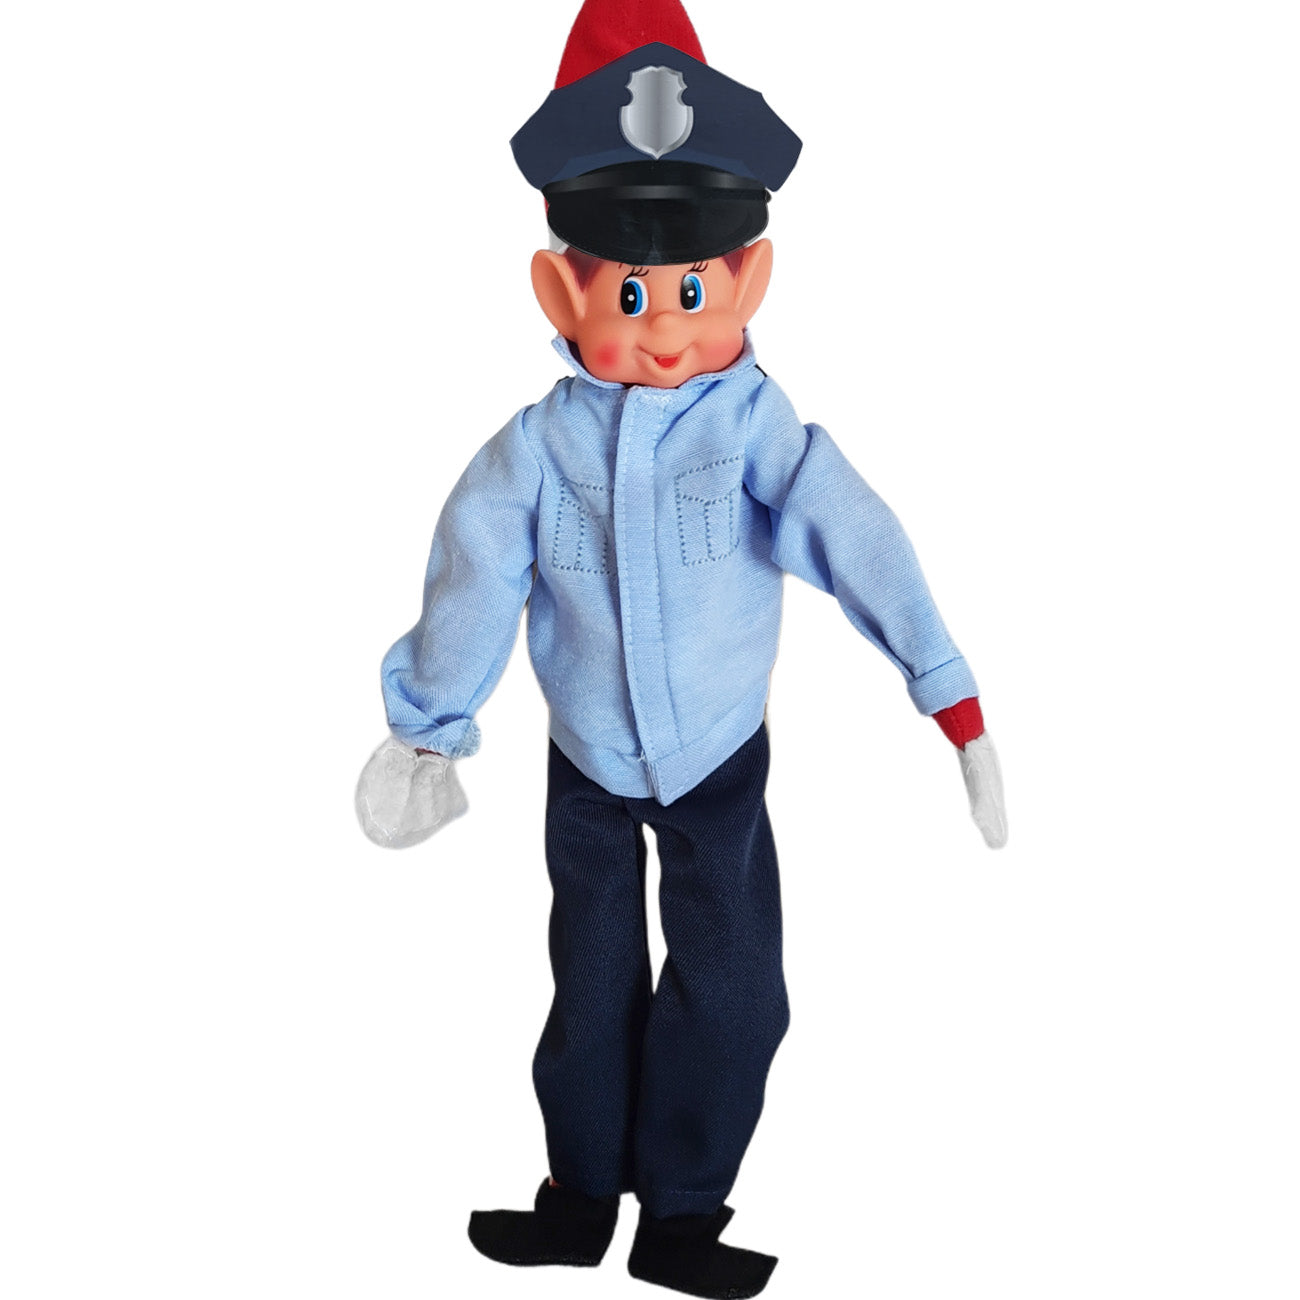 Elf wearing police costume